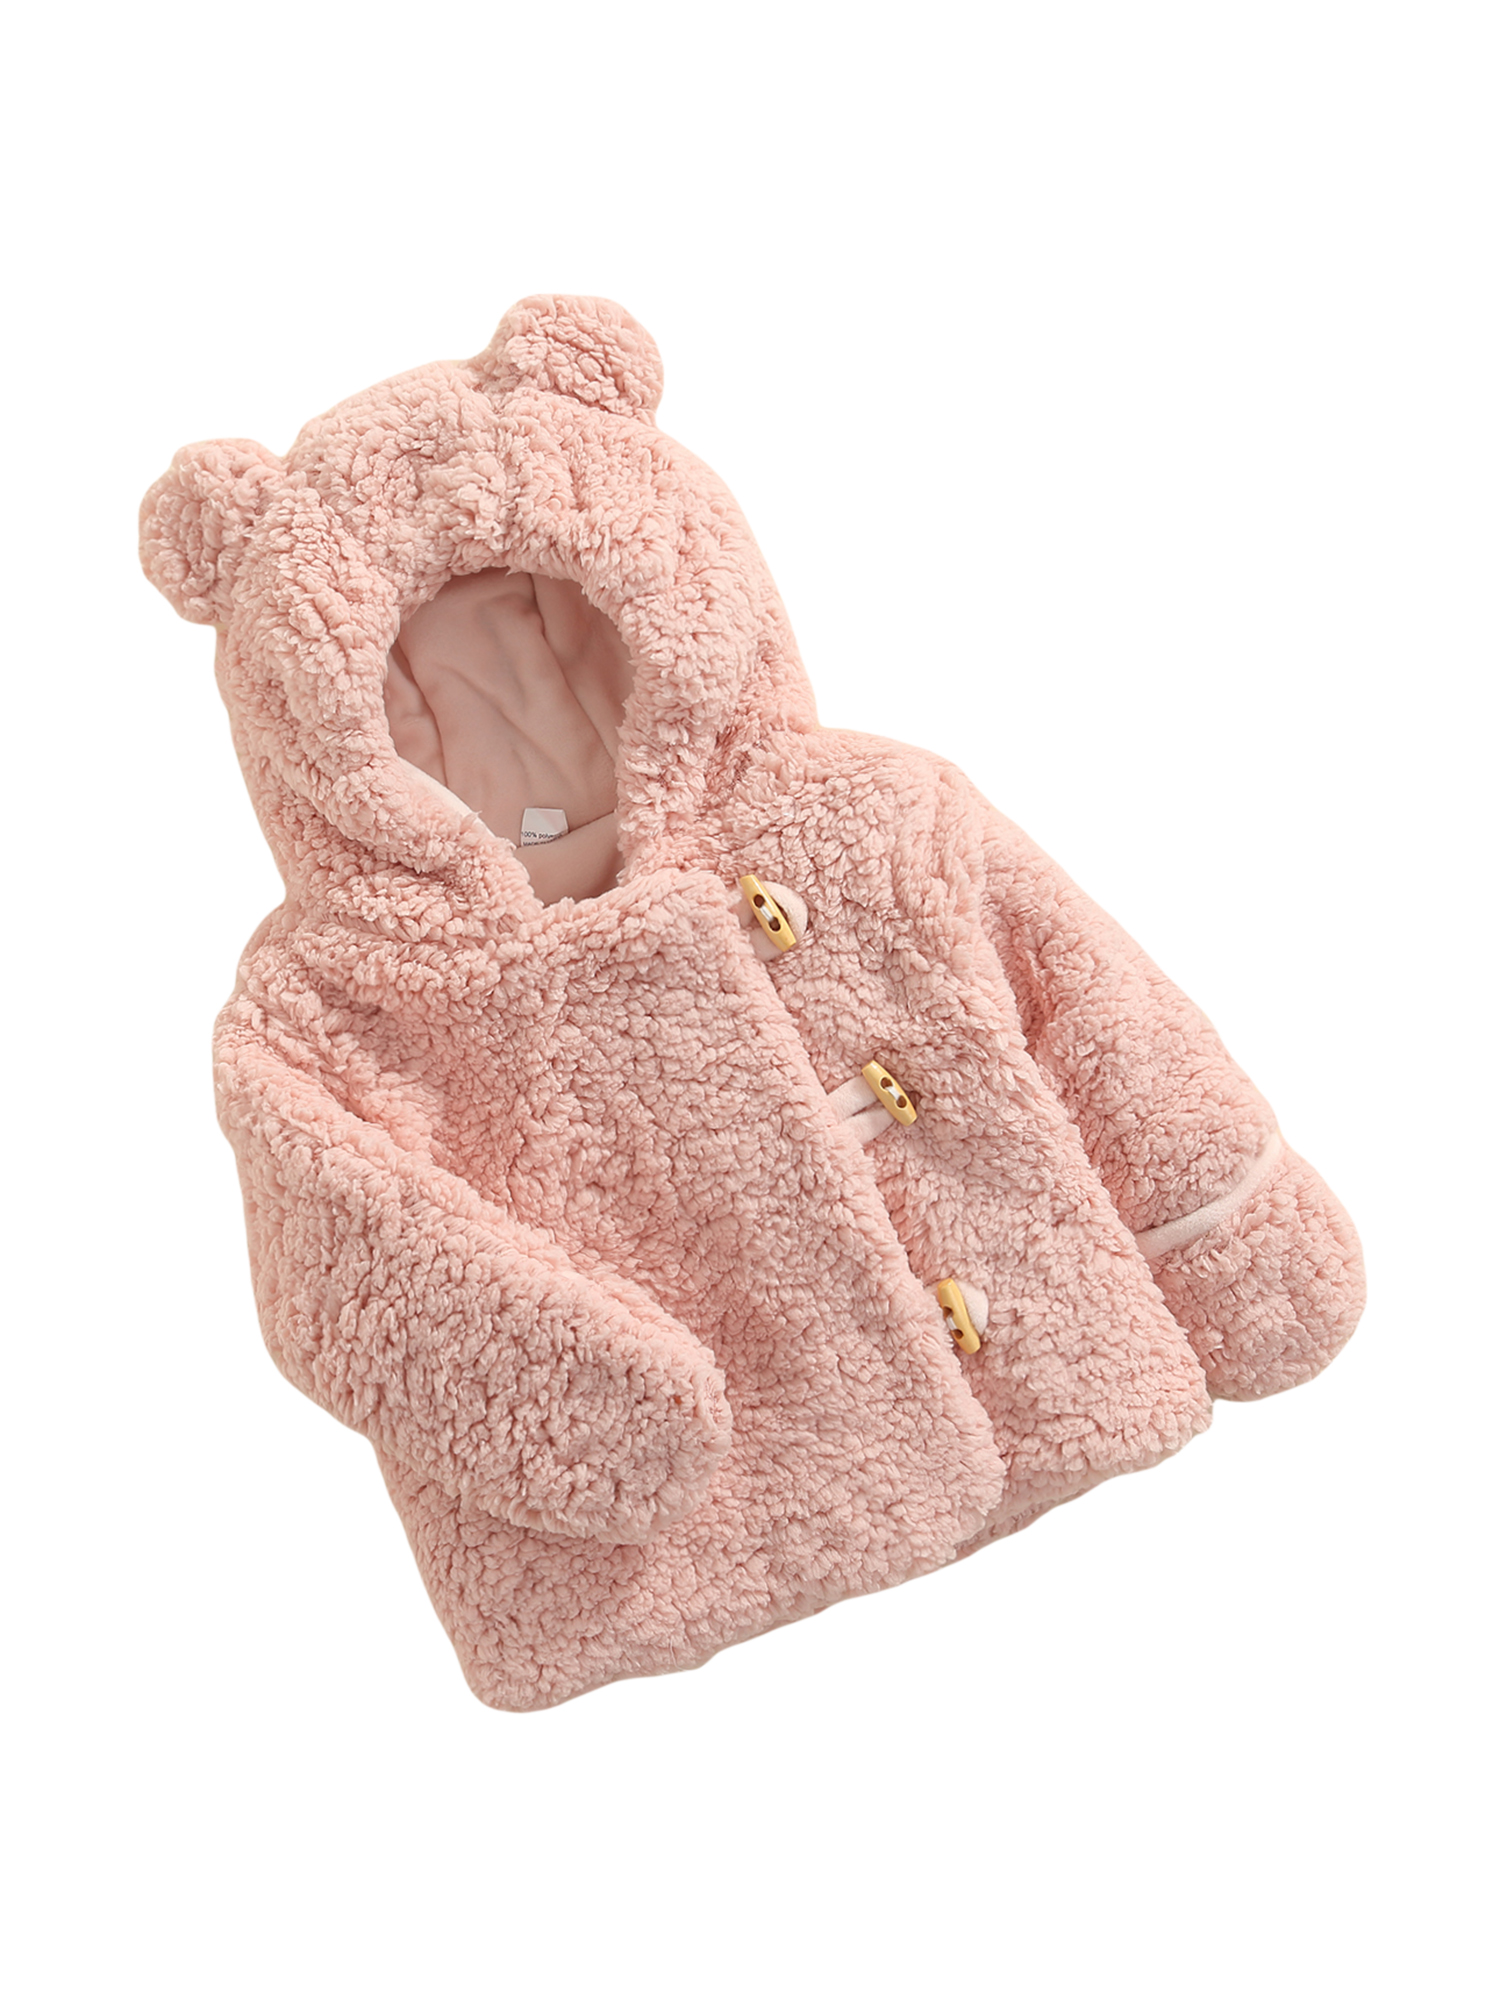 aturustex Baby Boys Girls Fleece Jacket Bear Ear Hoodie Warm Winter Outwear Top - image 2 of 7